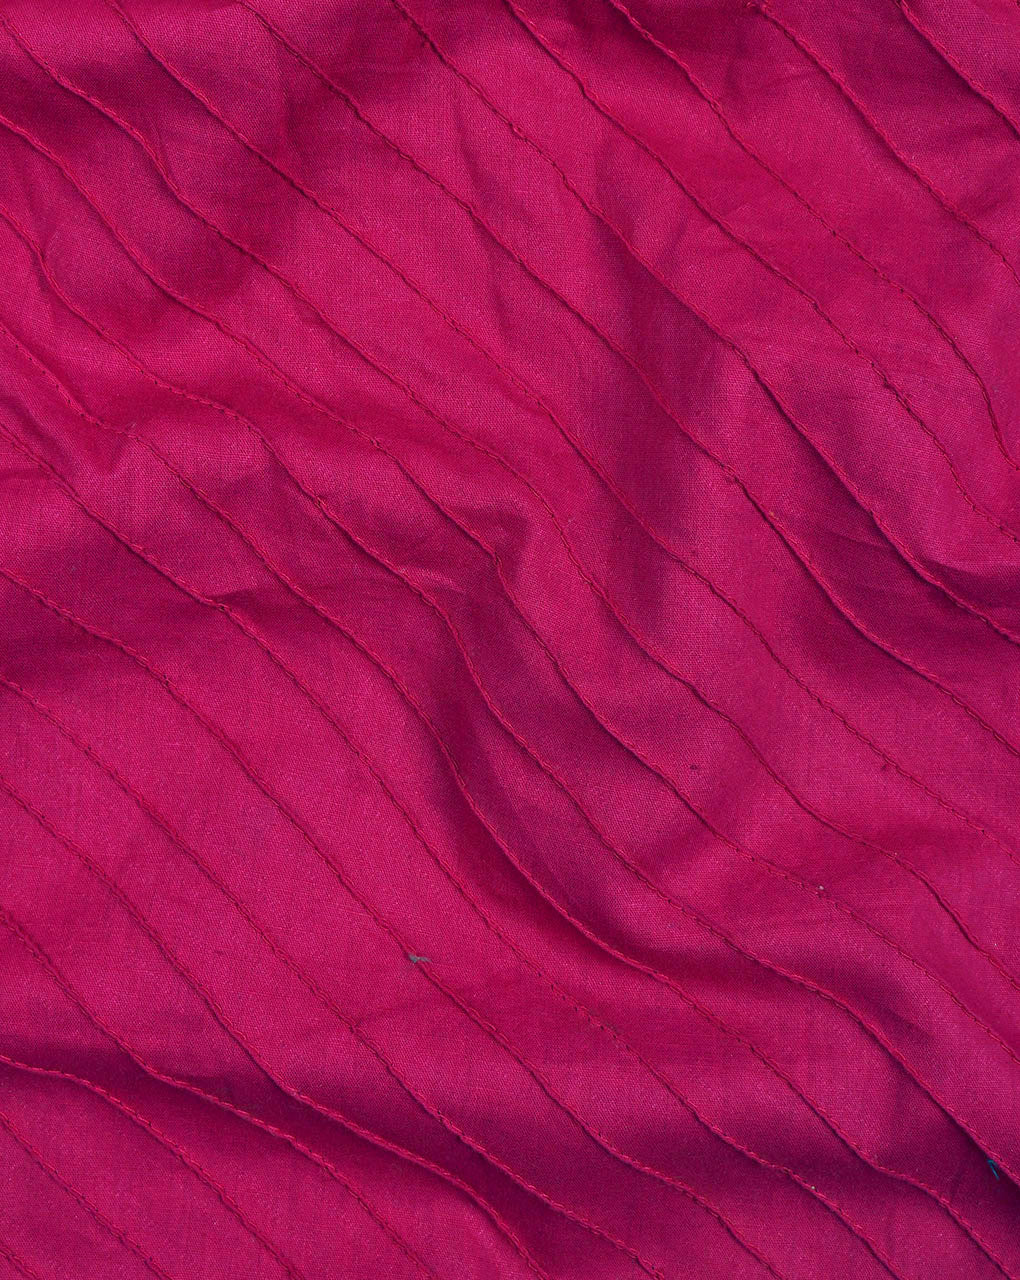 Fuchsia Plain Pin-Tucks Cotton Fabric ( Width 39 Inch ) - Fabriclore.com